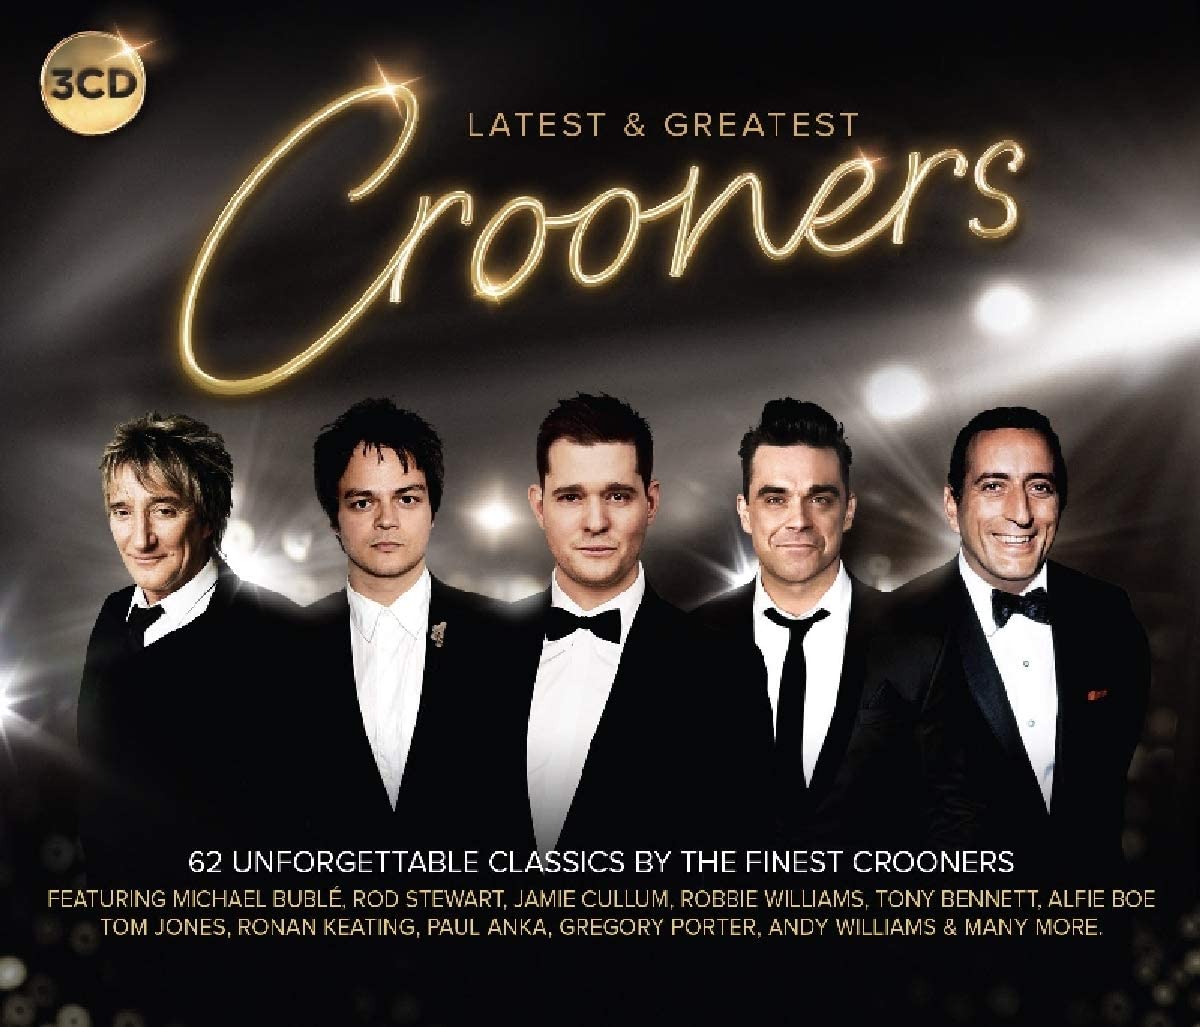 Latest & Greatest - Crooners